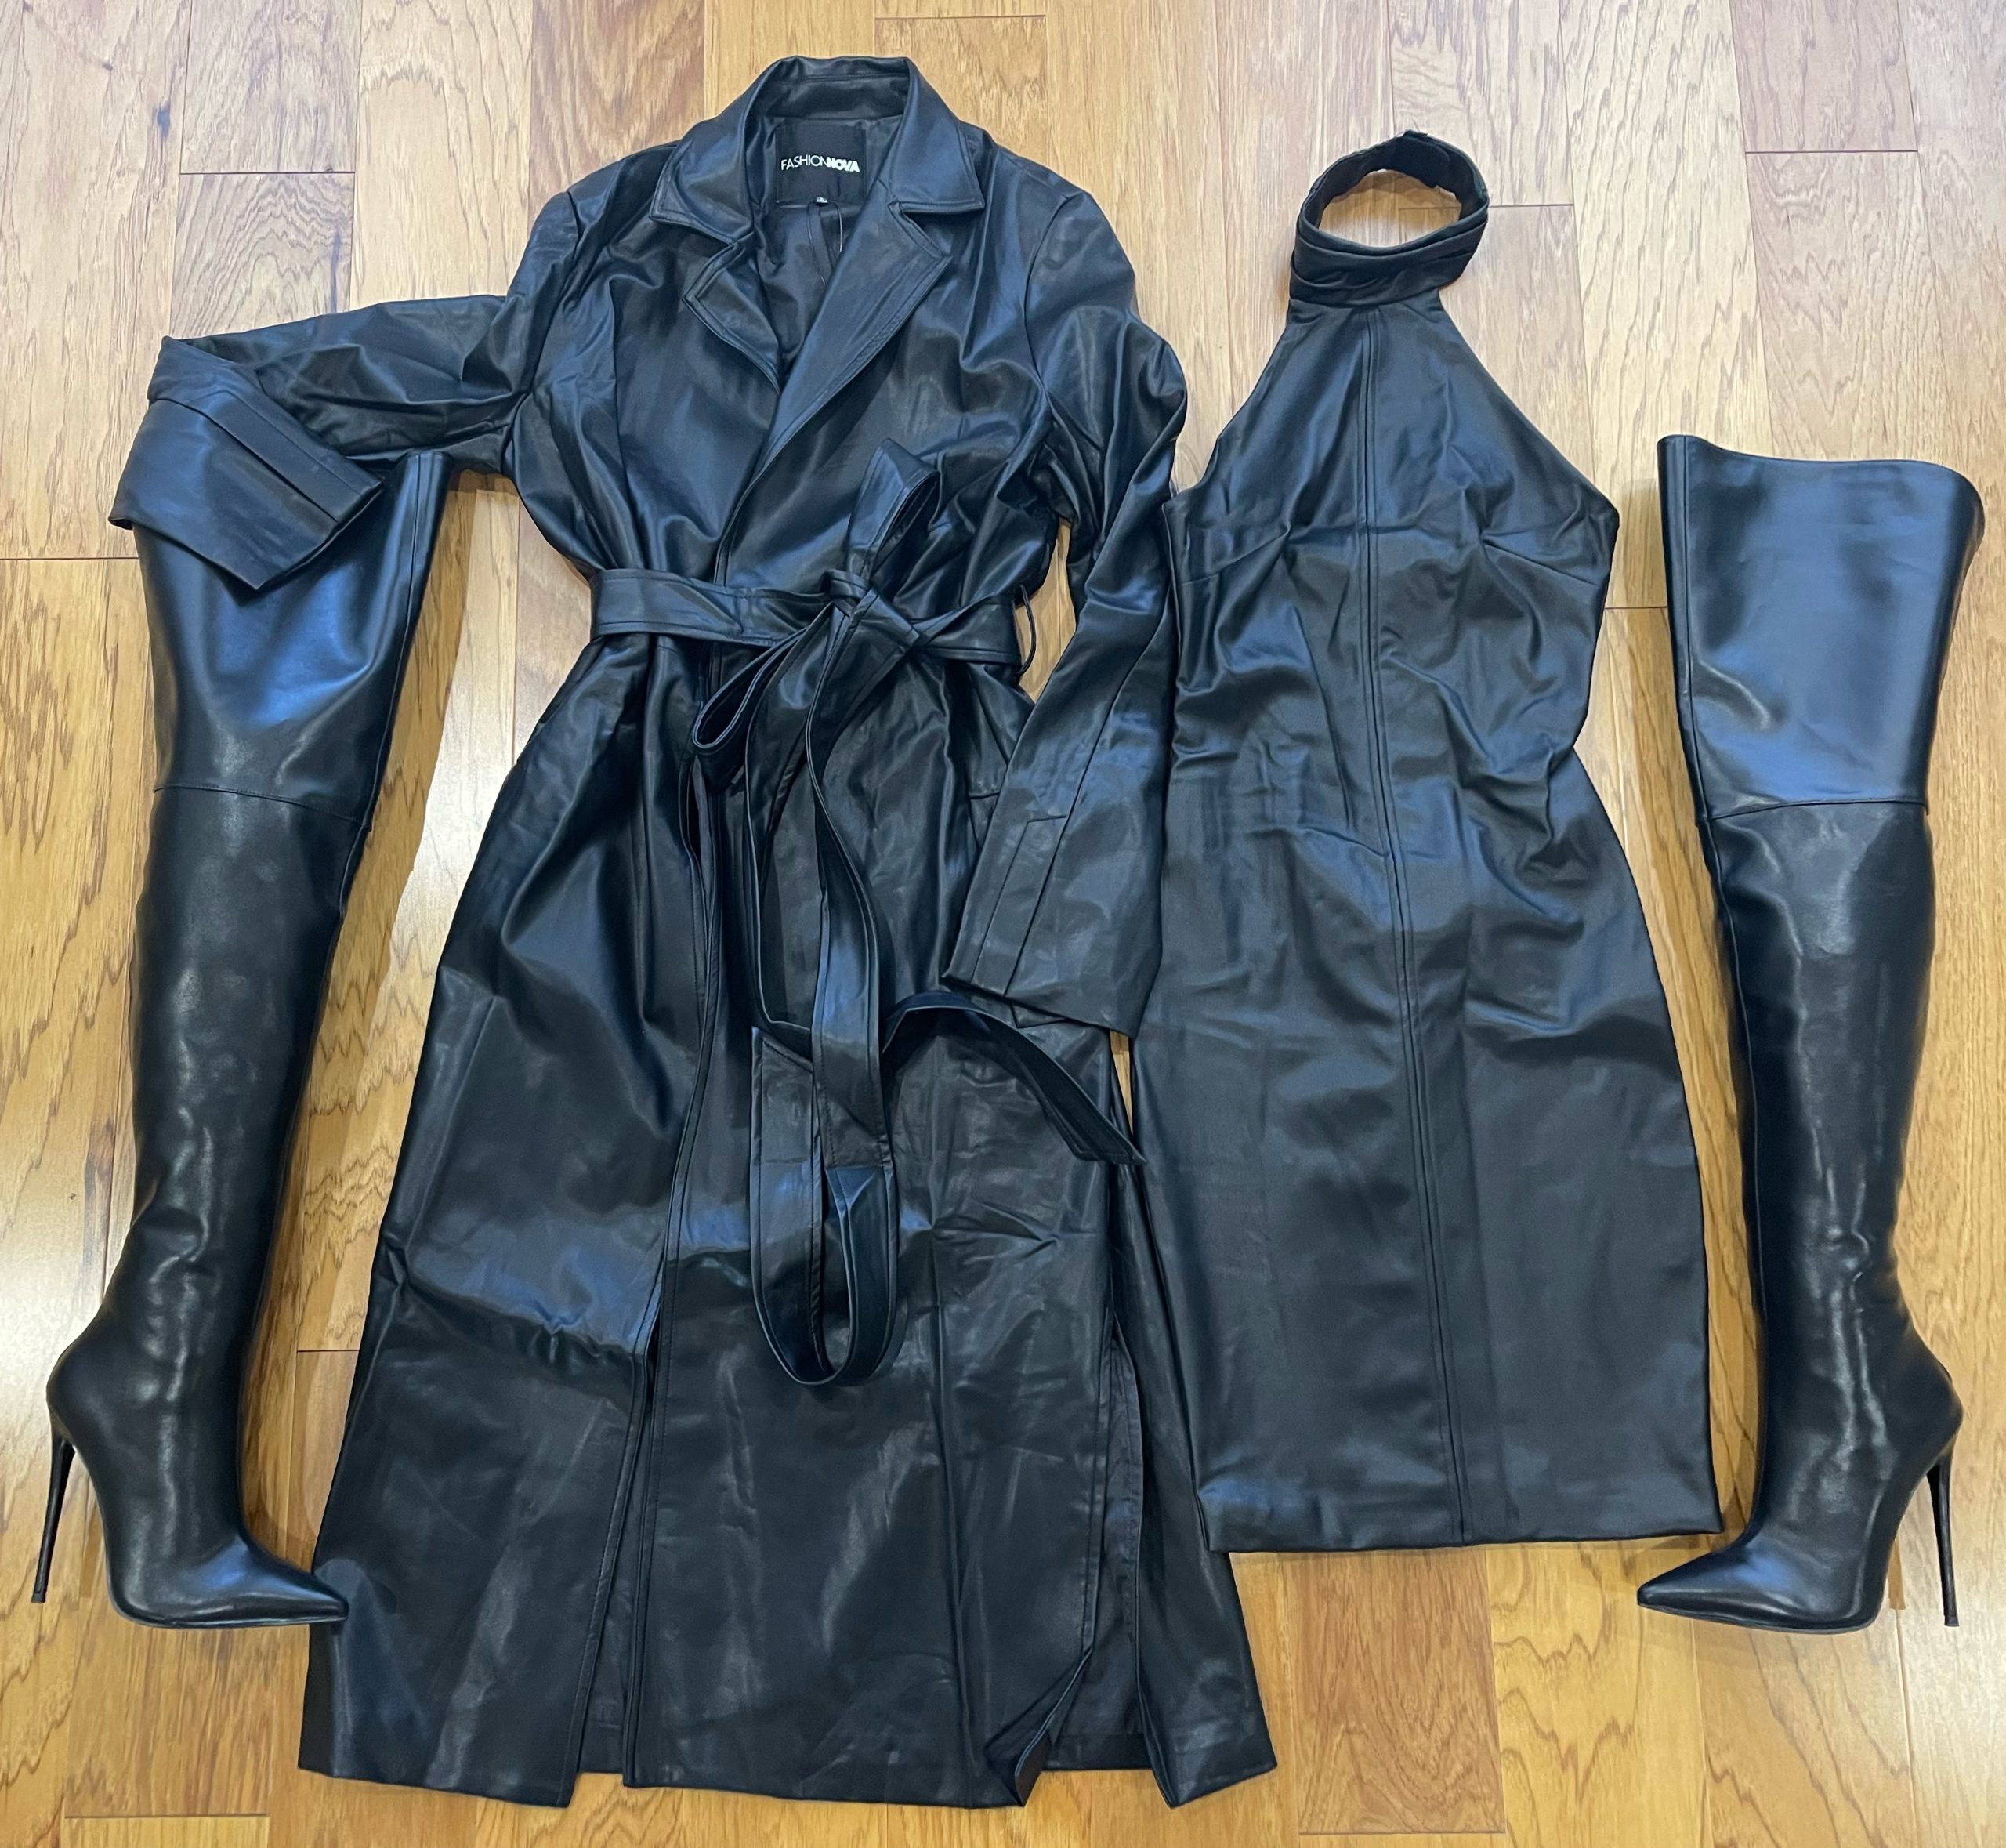 Fashionova black faux leather trench coat femme la scorpio thigh high boots